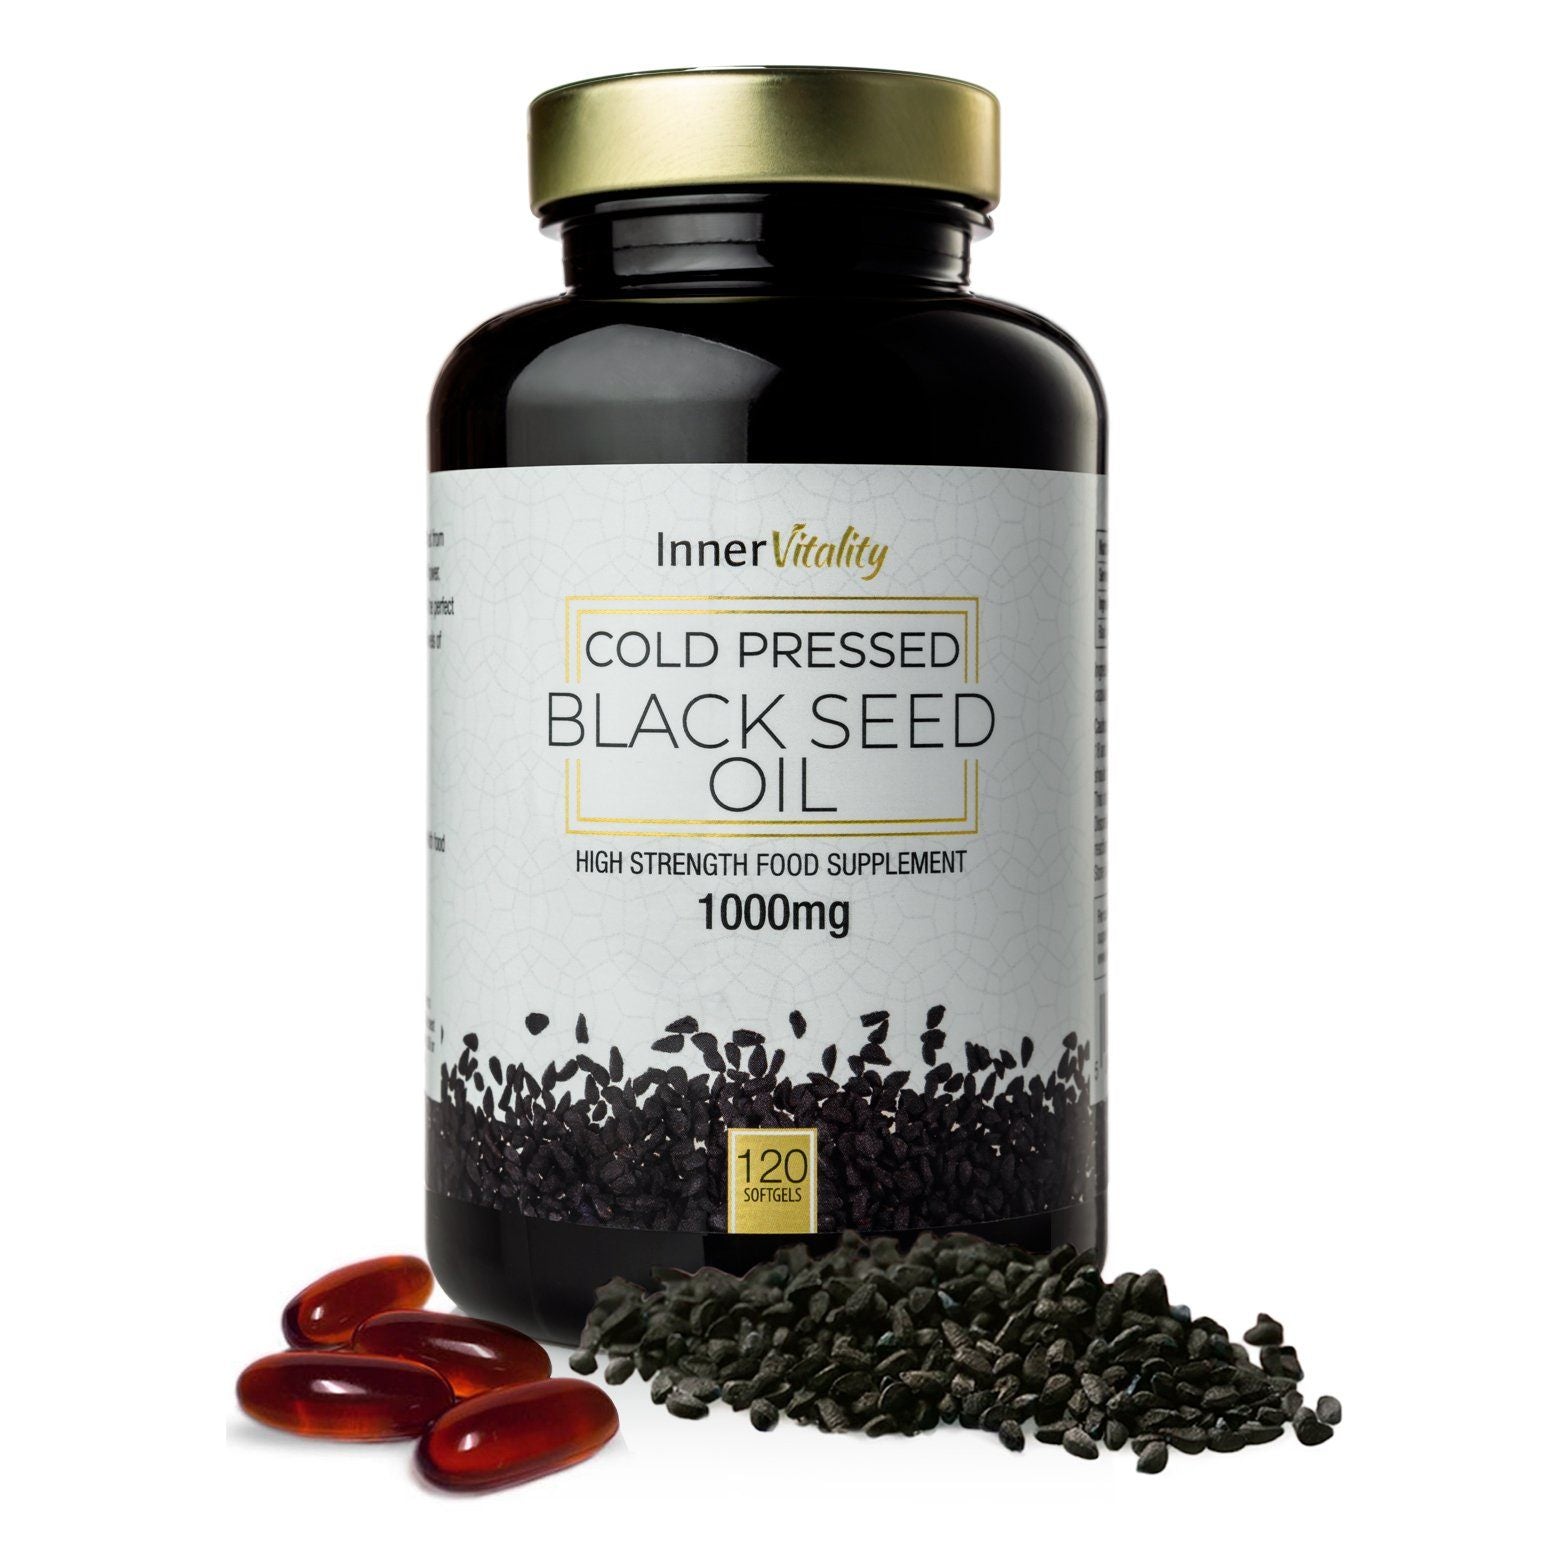 Black Seed Oil Capsules